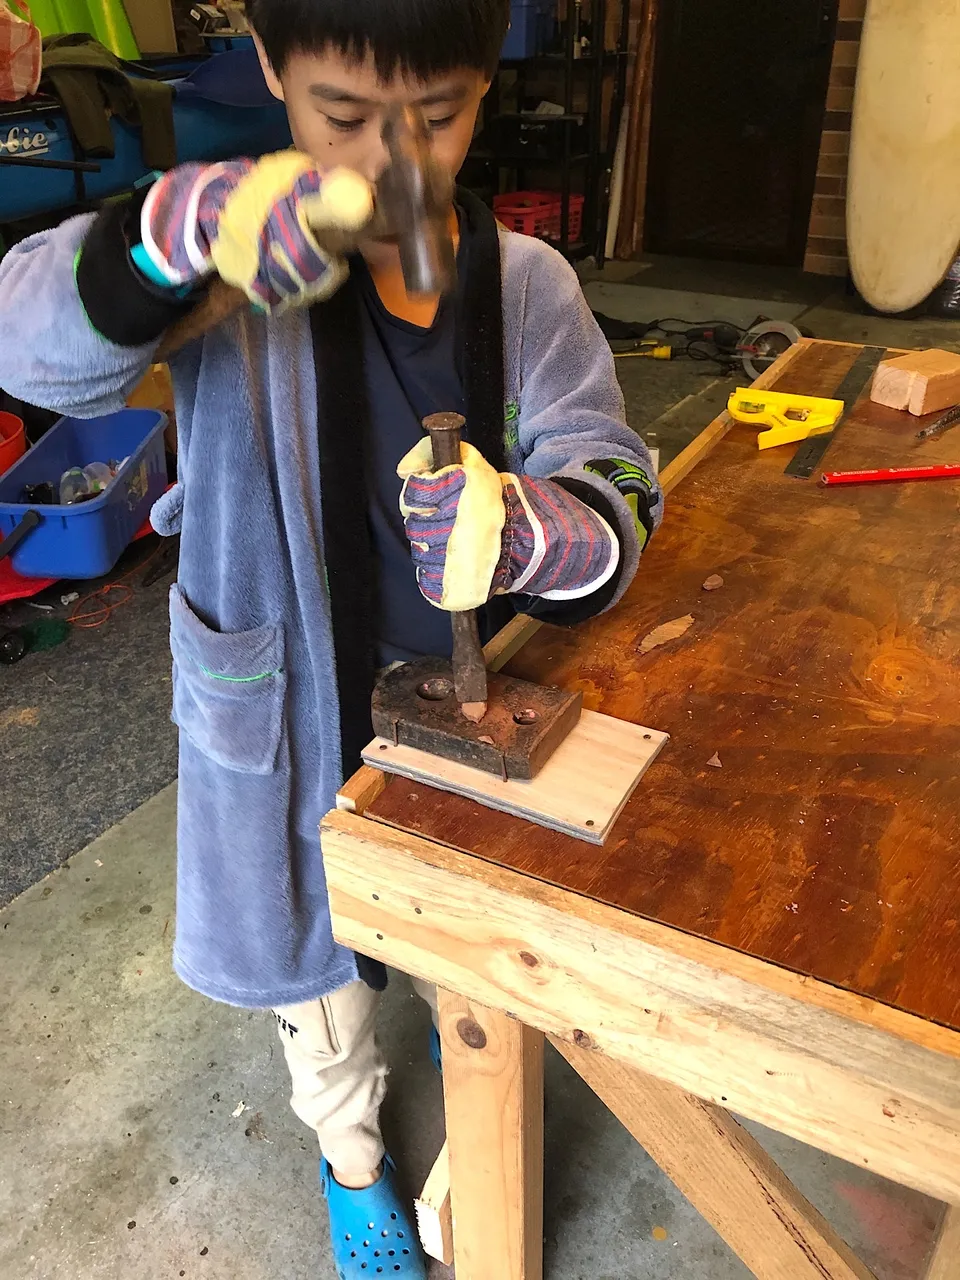 Testing his workbench anvil